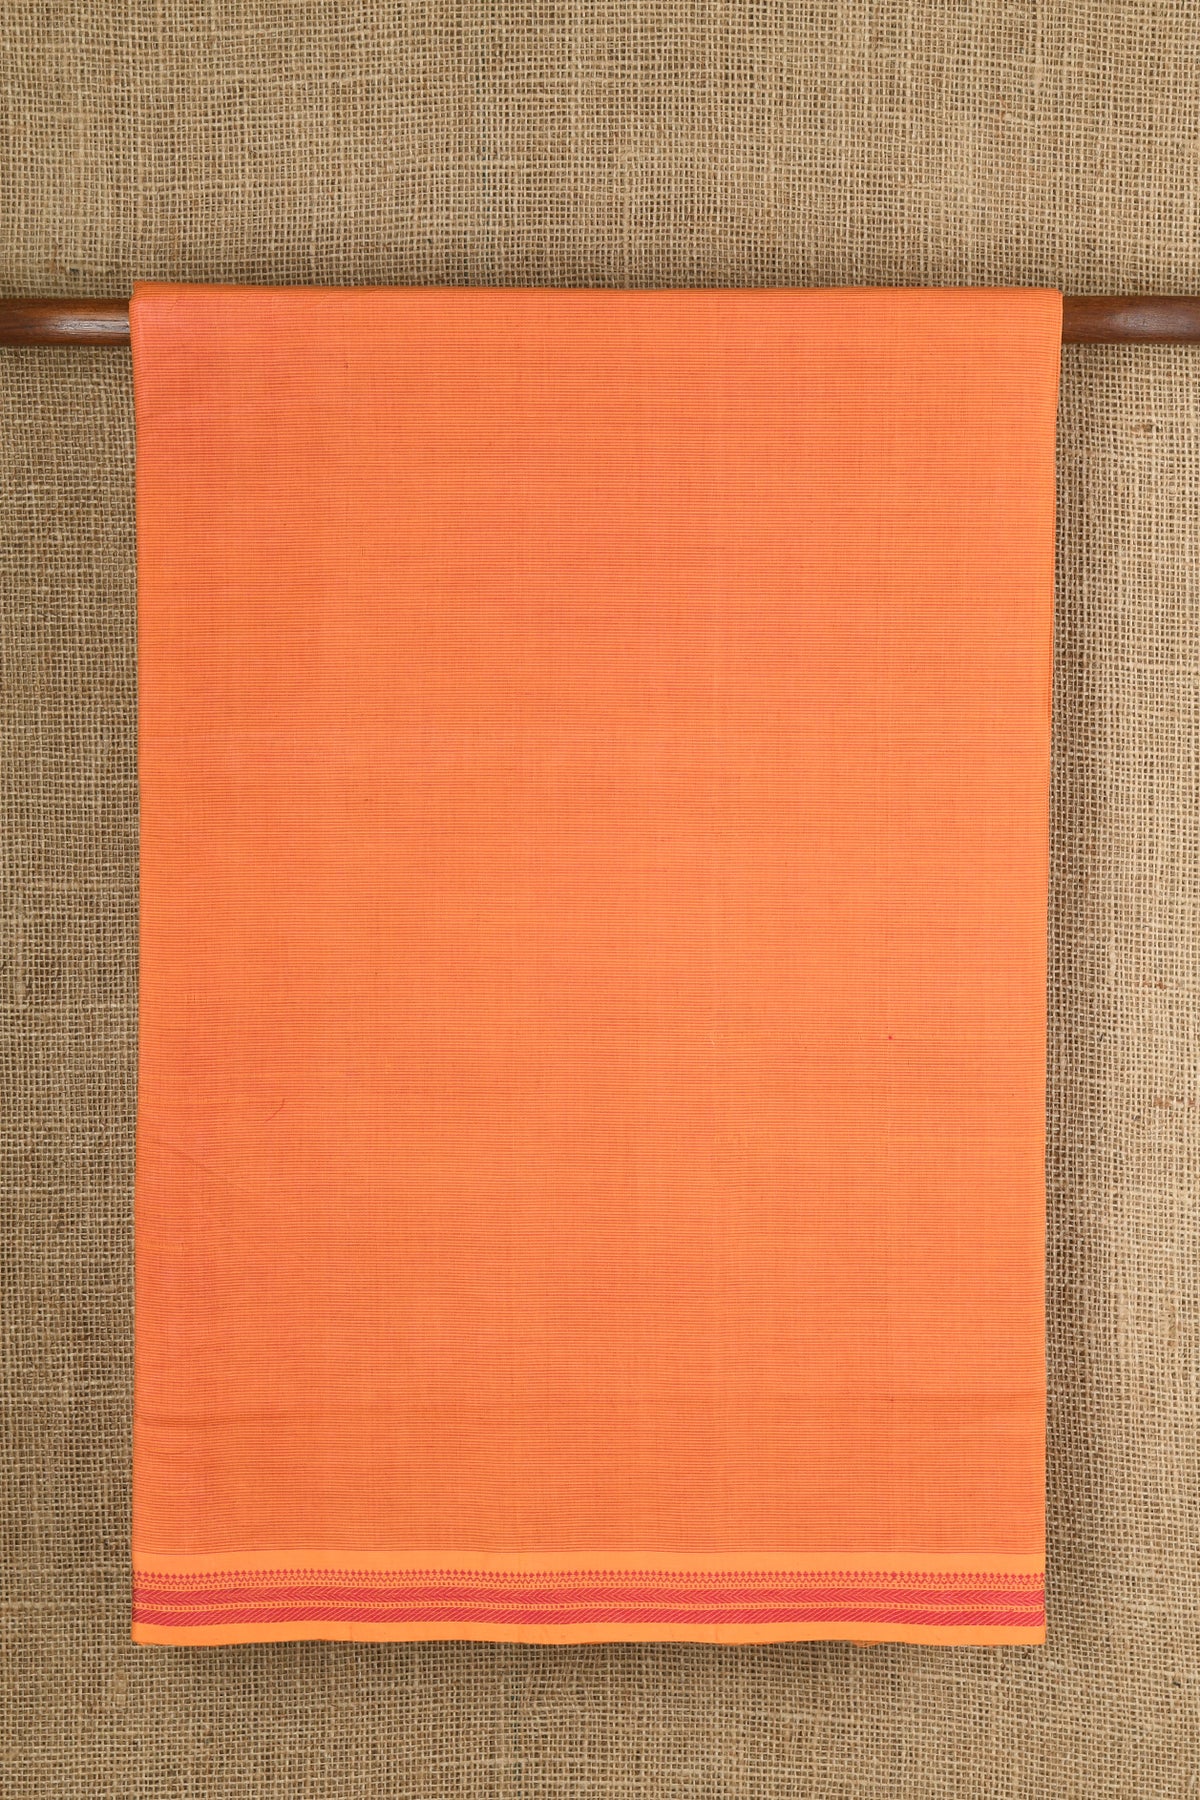 Thread Work Border With Small Stripes Marigold Orange Mangalagiri Cotton Saree